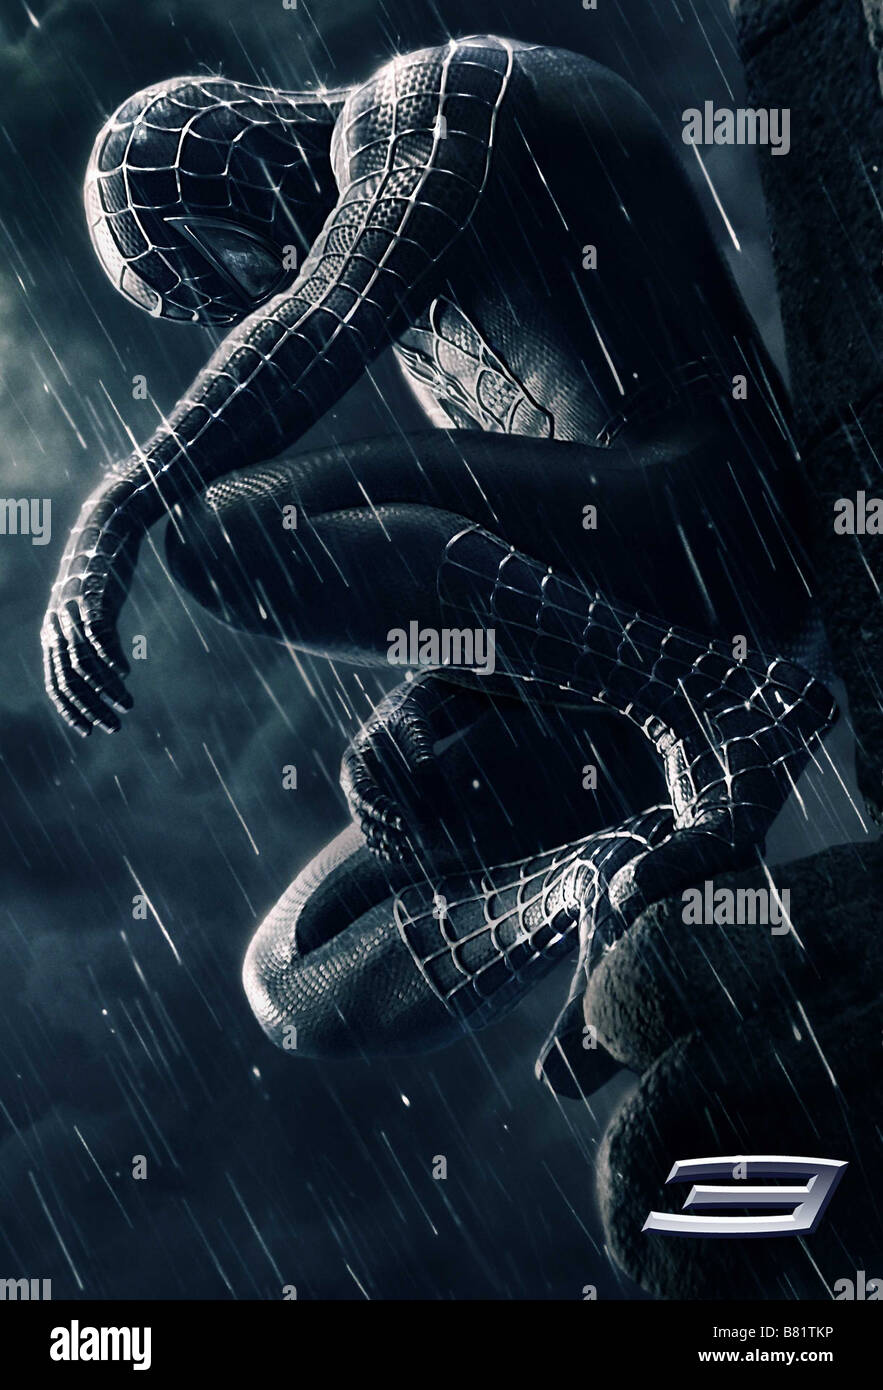 Spider man 3 Year: 2007 USA Affiche / Poster  Director: Sam Raimi Stock Photo